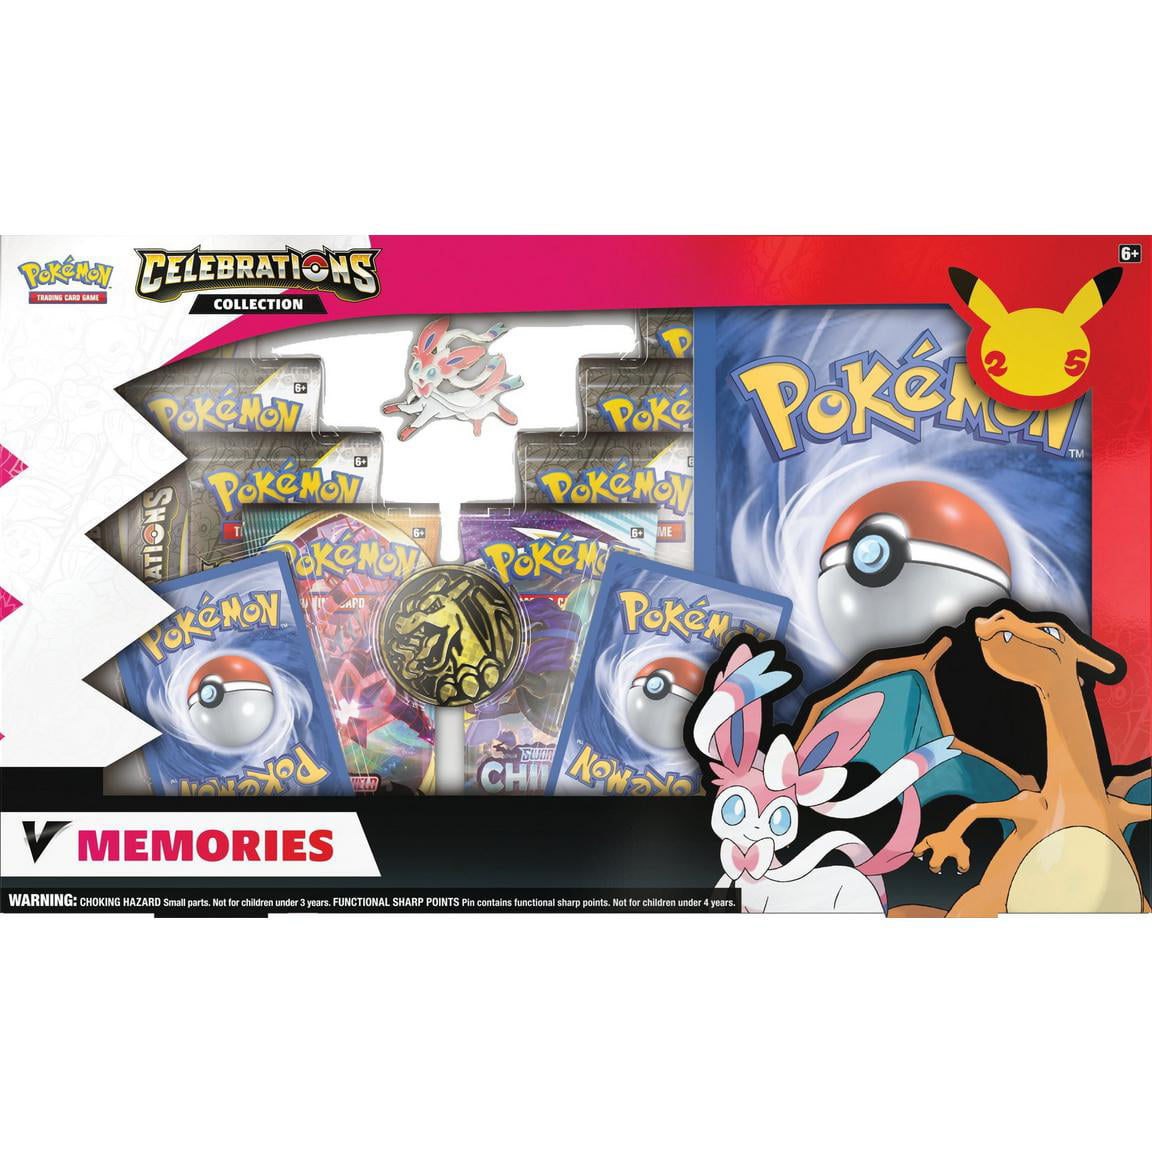 PKMN Trading Card Game Promos 8 Packs Celebrations V Memories Collection 